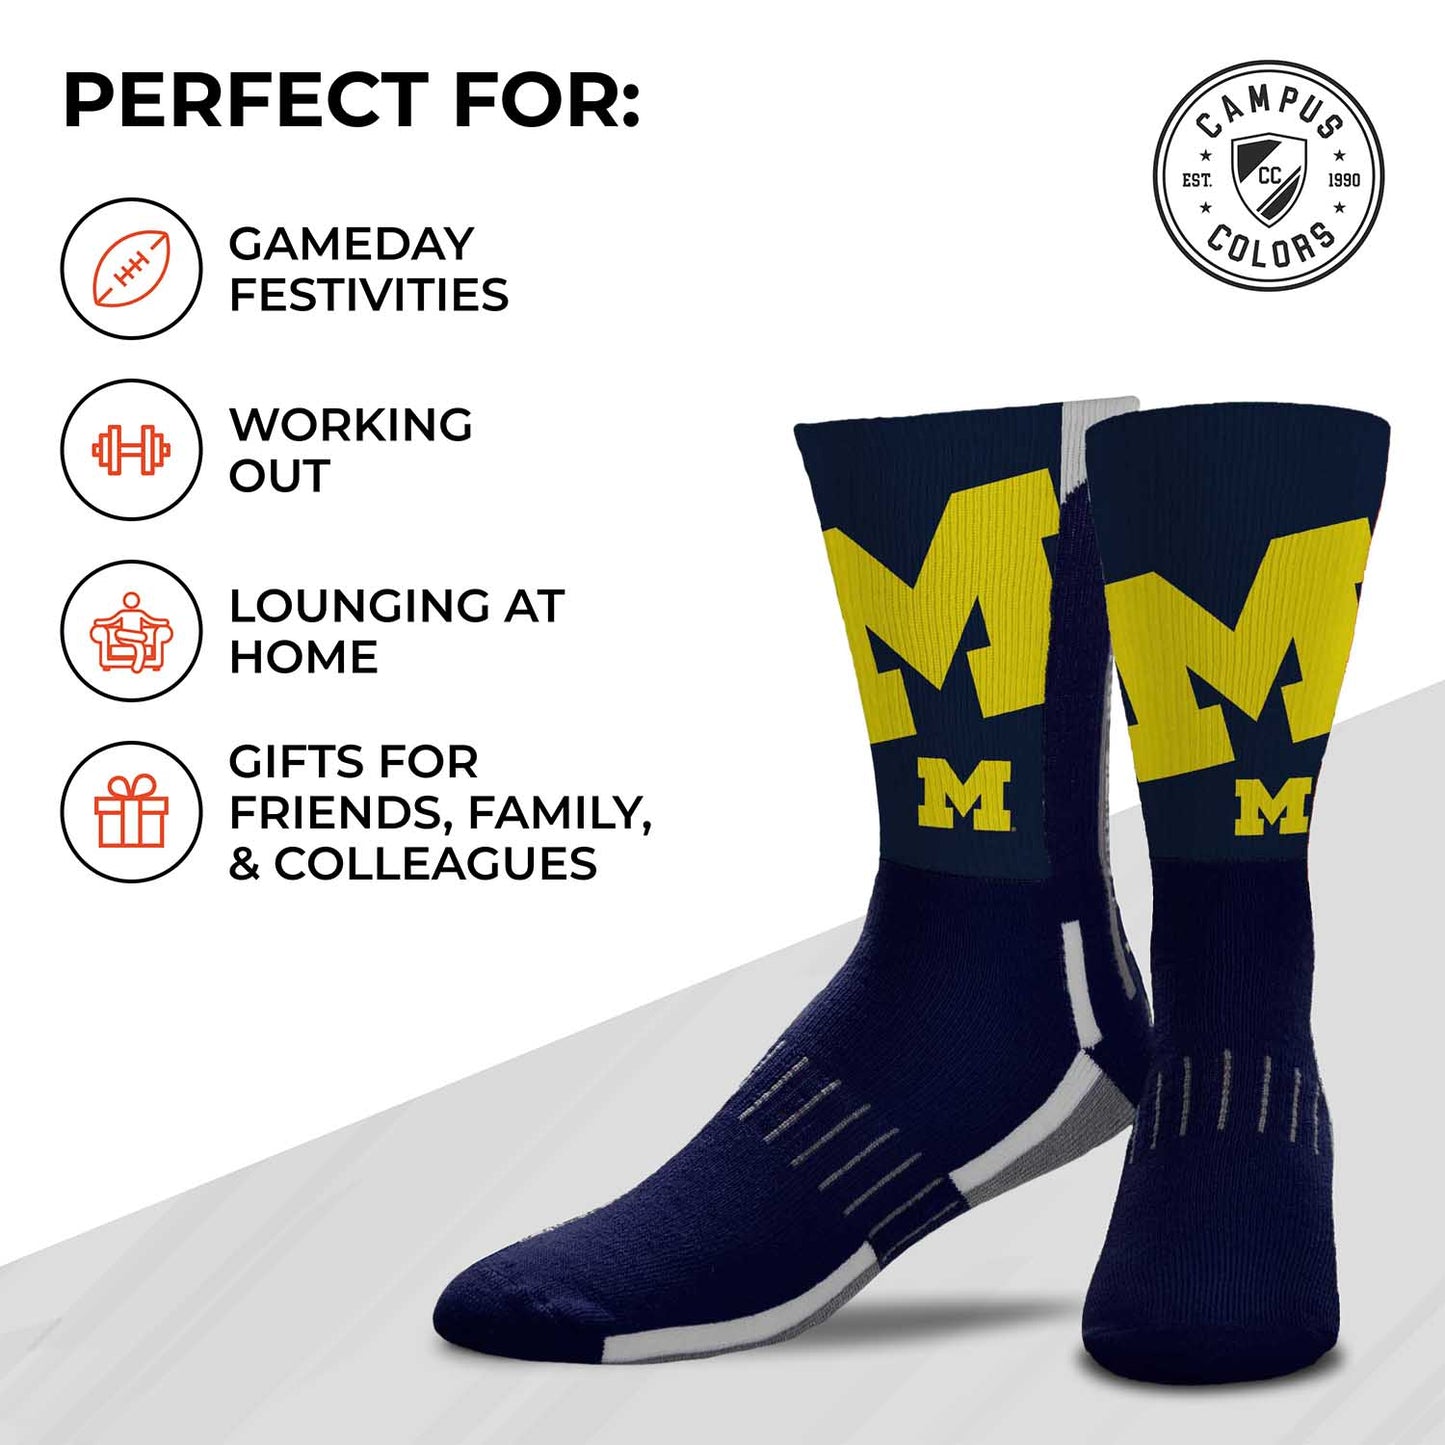 Michigan Wolverines NCAA Adult State and University Crew Socks - Indigo/Navy